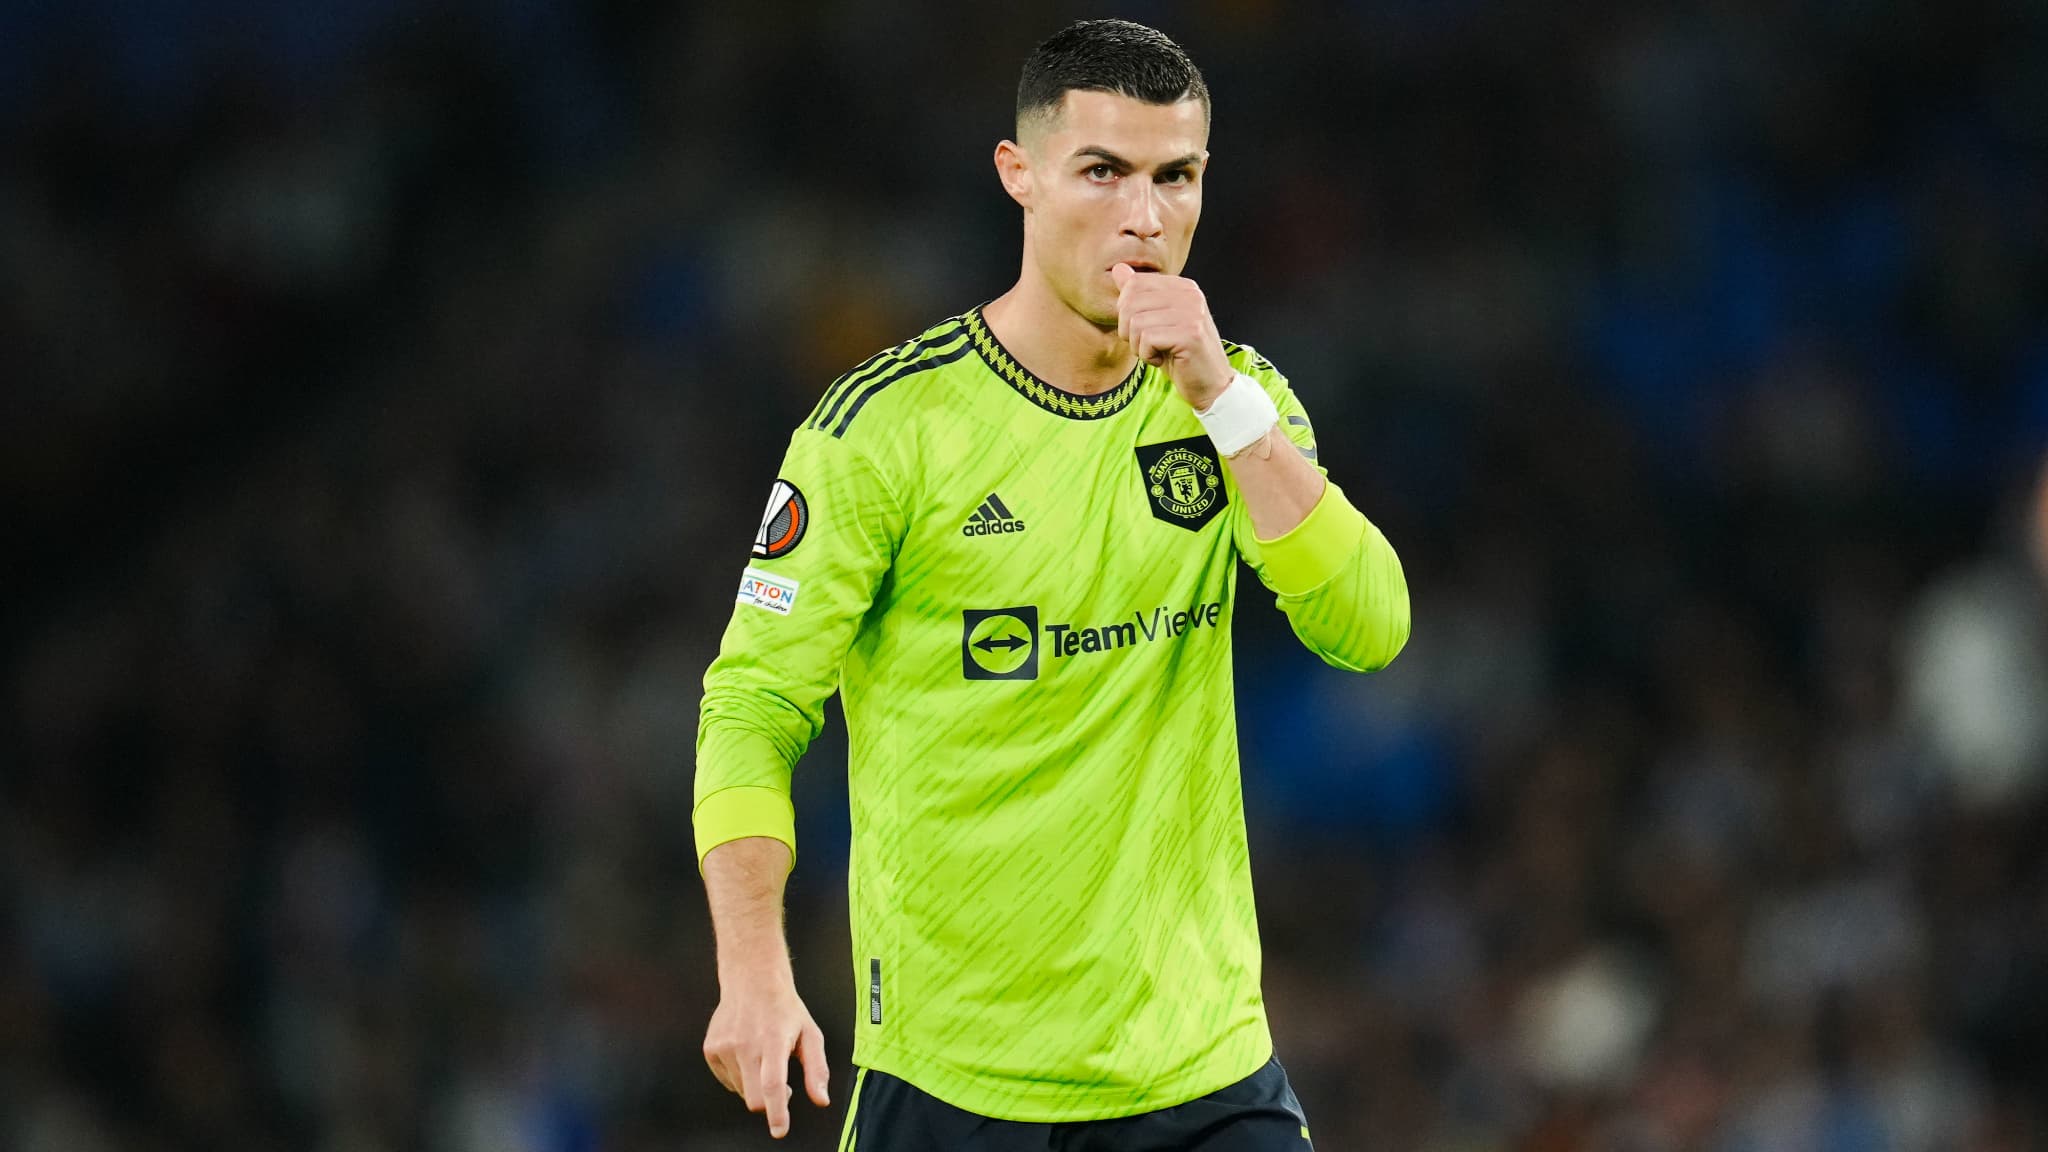 Alex Ferguson referee who made Ronaldo refuse to return City to Manchester United